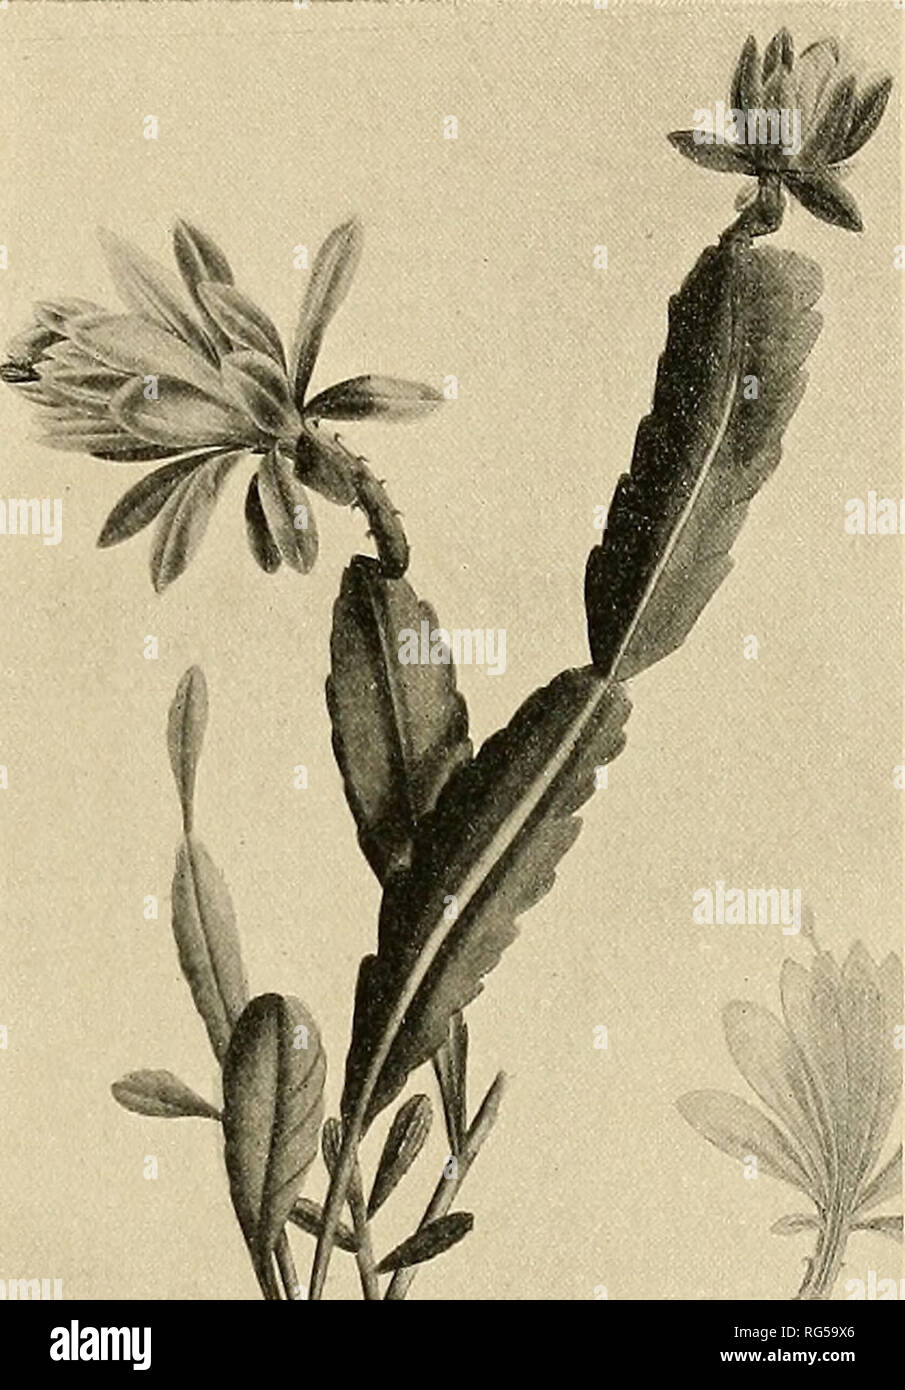 . The Cactaceae : descriptions and illustrations of plants of the cactus family. NOPAIvXOCHIA. 205 1. Nopalxochia phyllanthoides (De Candolle). Cactus phyllanthoides De Candolle, Cat. Hort. Monsp. 84. 1813. Cactus speciosus Bonpland, Descr. PI. Rar. Malm. 8. 1813. Not Cavanilles, 1803. Epiphyllum speciosum Haworth, Suppl. PI. Succ. 84. 1819. Cactus elegans Link, Enum. 2: 25. 1822. Epiphyllum phyllanthoides Sweet, Hort. Brit. 172. 1826. Cereus phyllanthoides De Candolle, Prodr. 3: 469. 1828. Phyllocactus phyllanthoides Link, Handb. Gewachs. 2:11. 1831. Opuntia speciosa Steudel, Nom. ed. 2. 2: 2 Stock Photo